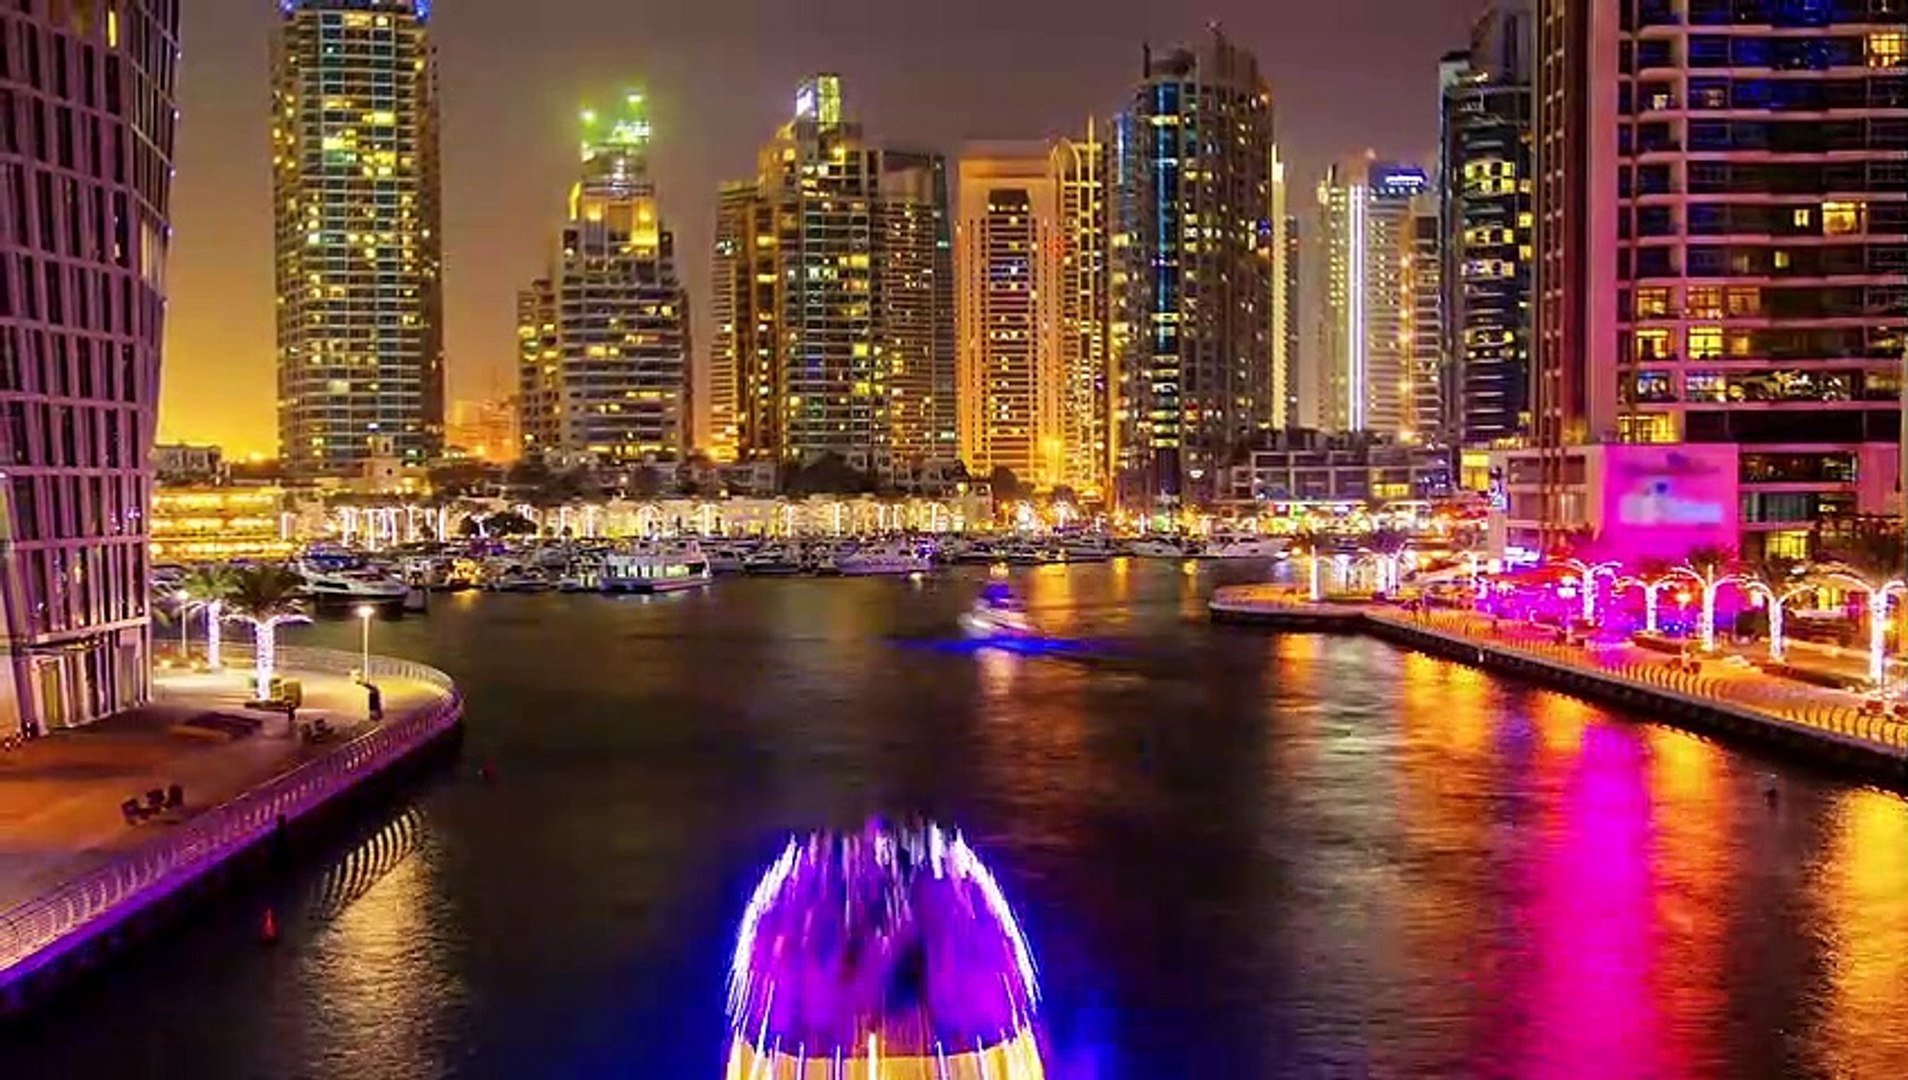 DUBAI, United Arab Emirates 8K Video Ultra HD 240 FPS in Drone